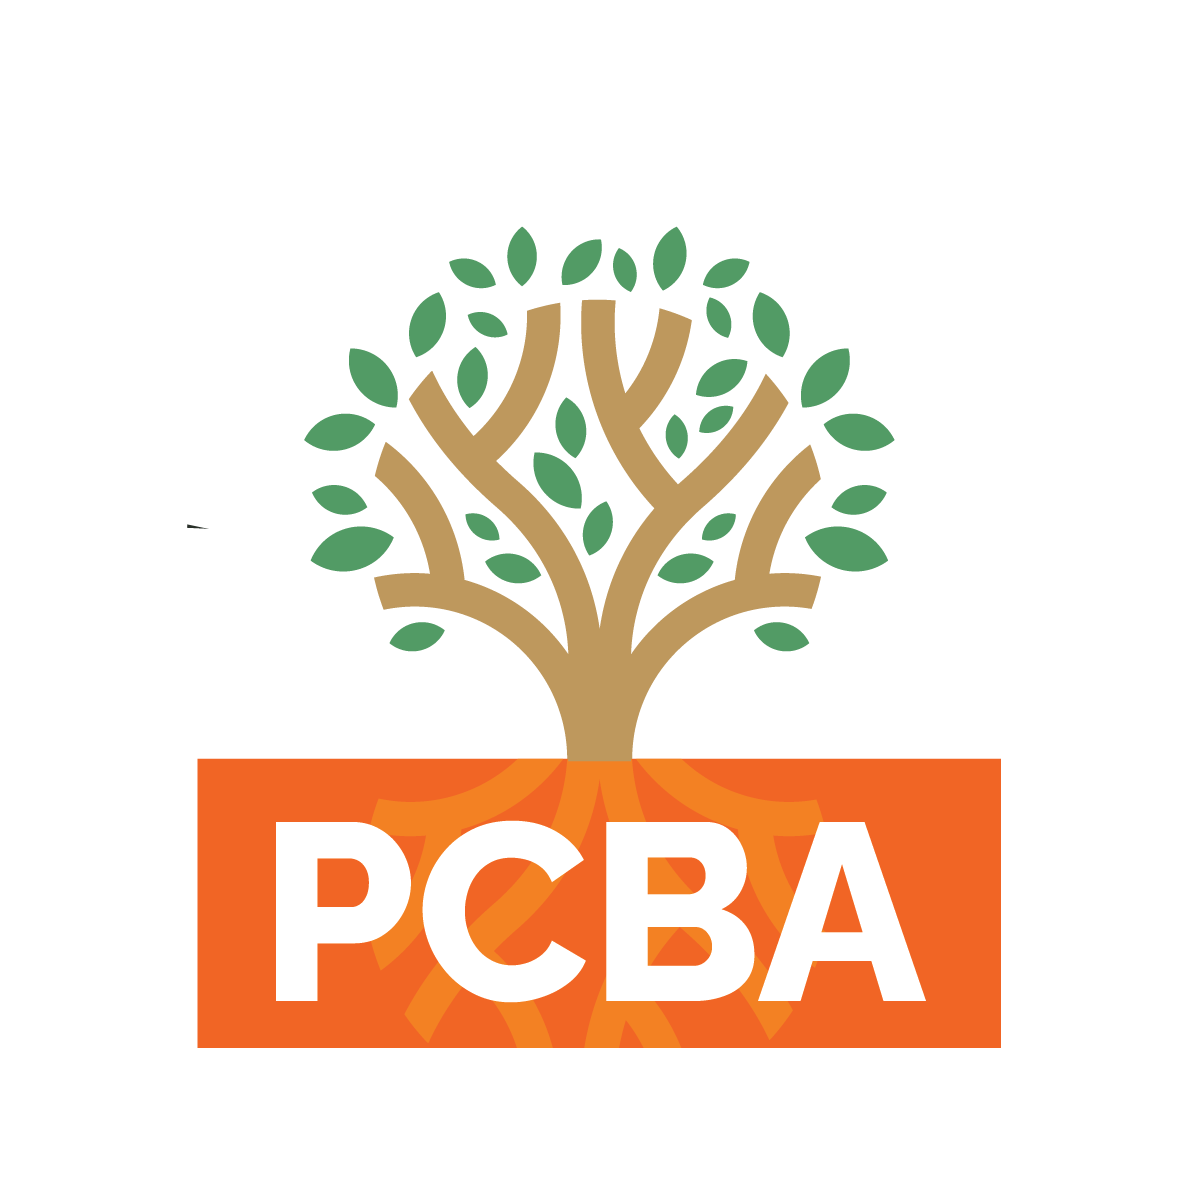 Philadelphia CannaBusiness Association (PCBA